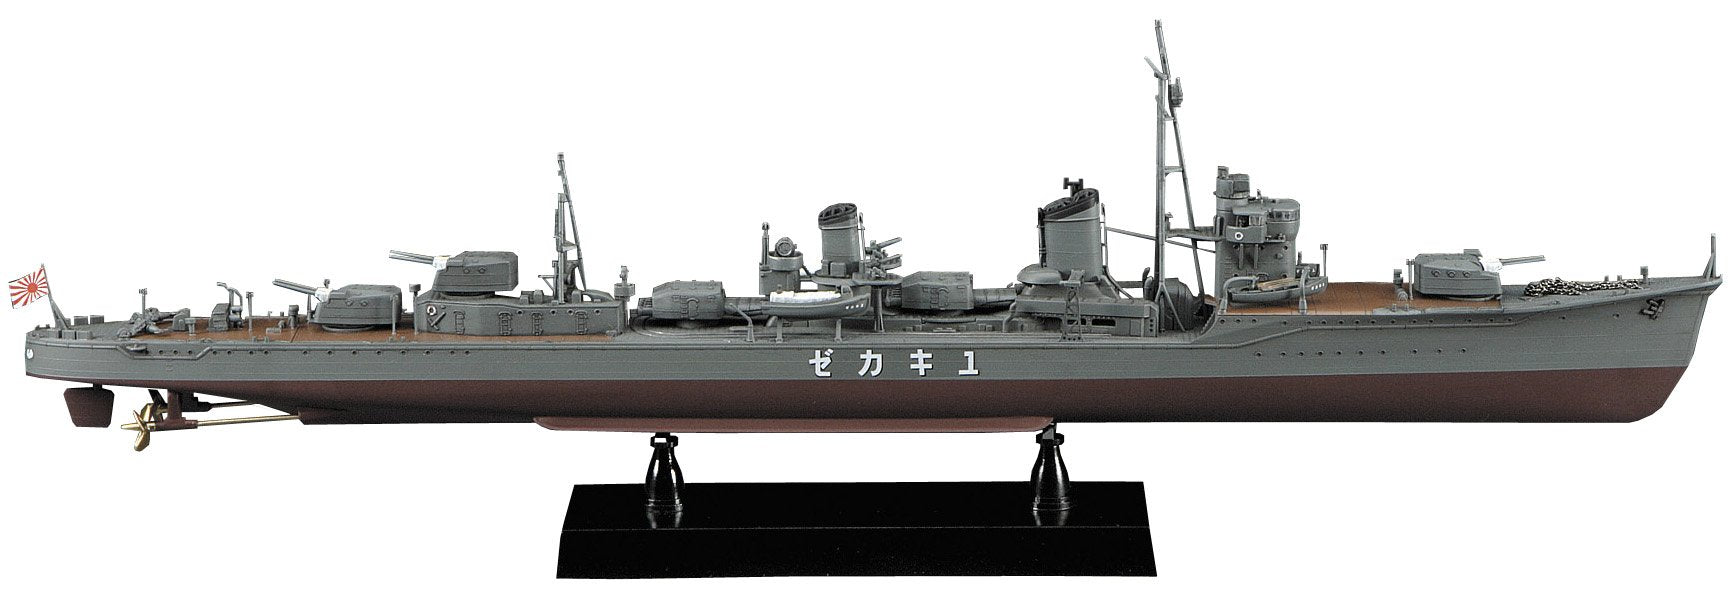 Hasegawa 40063 1/350 Japanese Navy Japanese Navy Armored Destroyer Yukikaze Showa 15 Completion Plastic Model